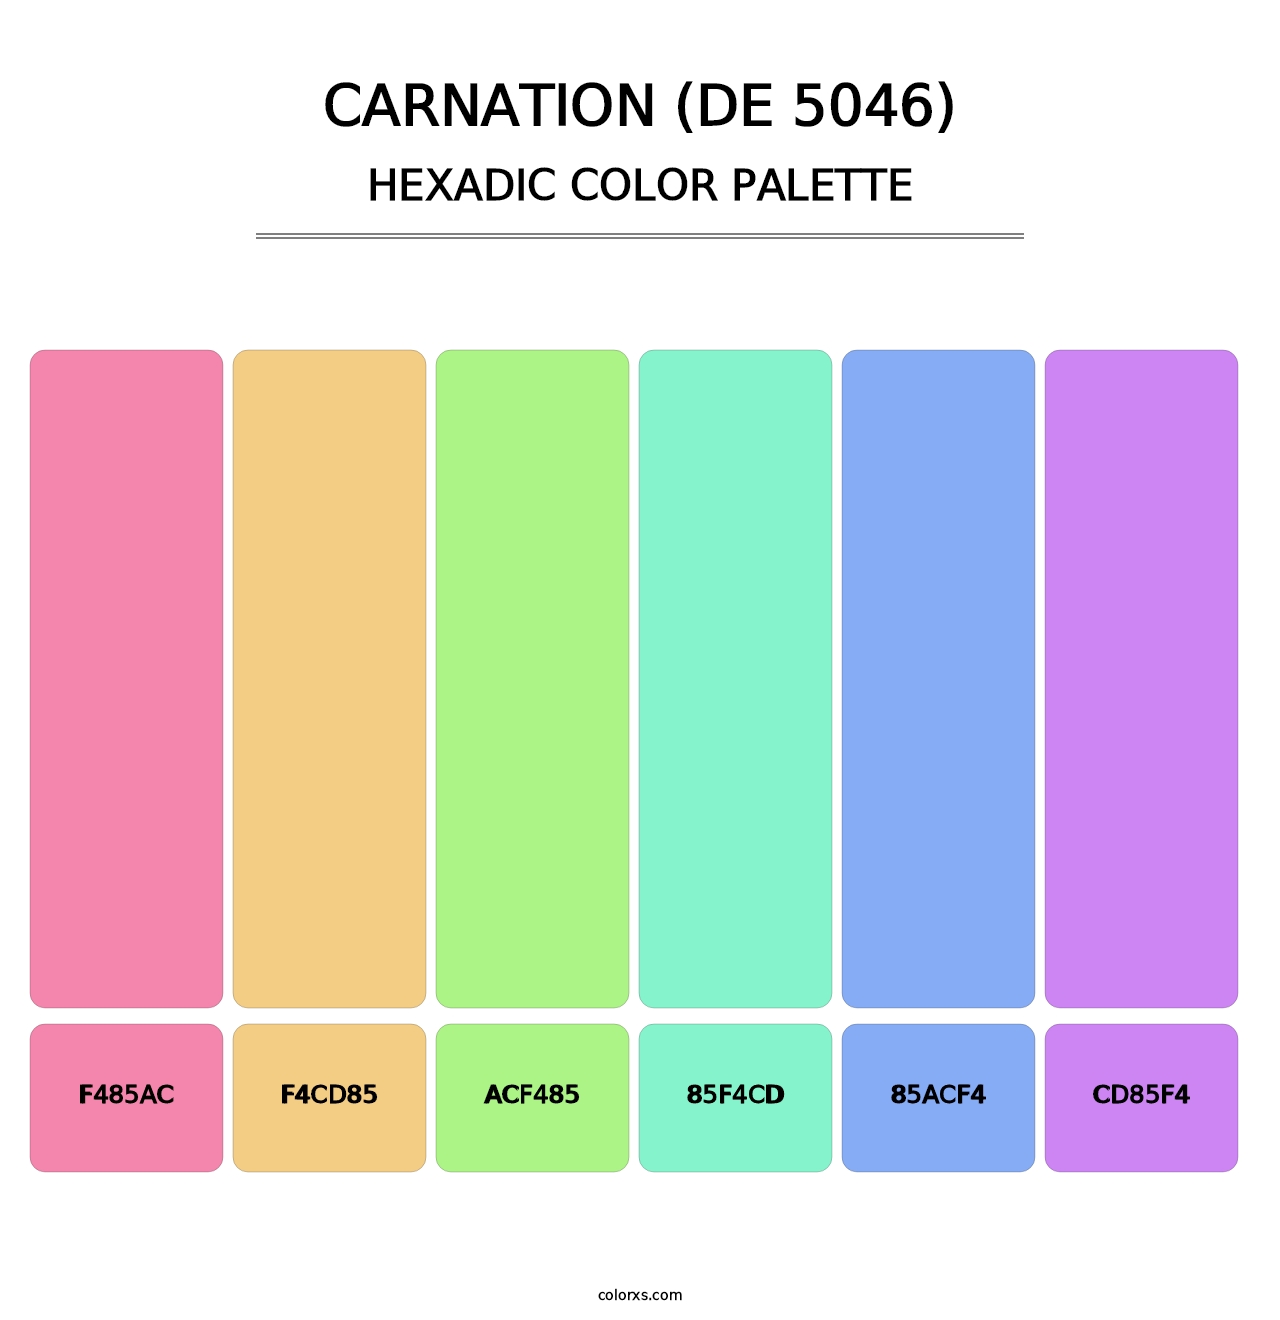 Carnation (DE 5046) - Hexadic Color Palette